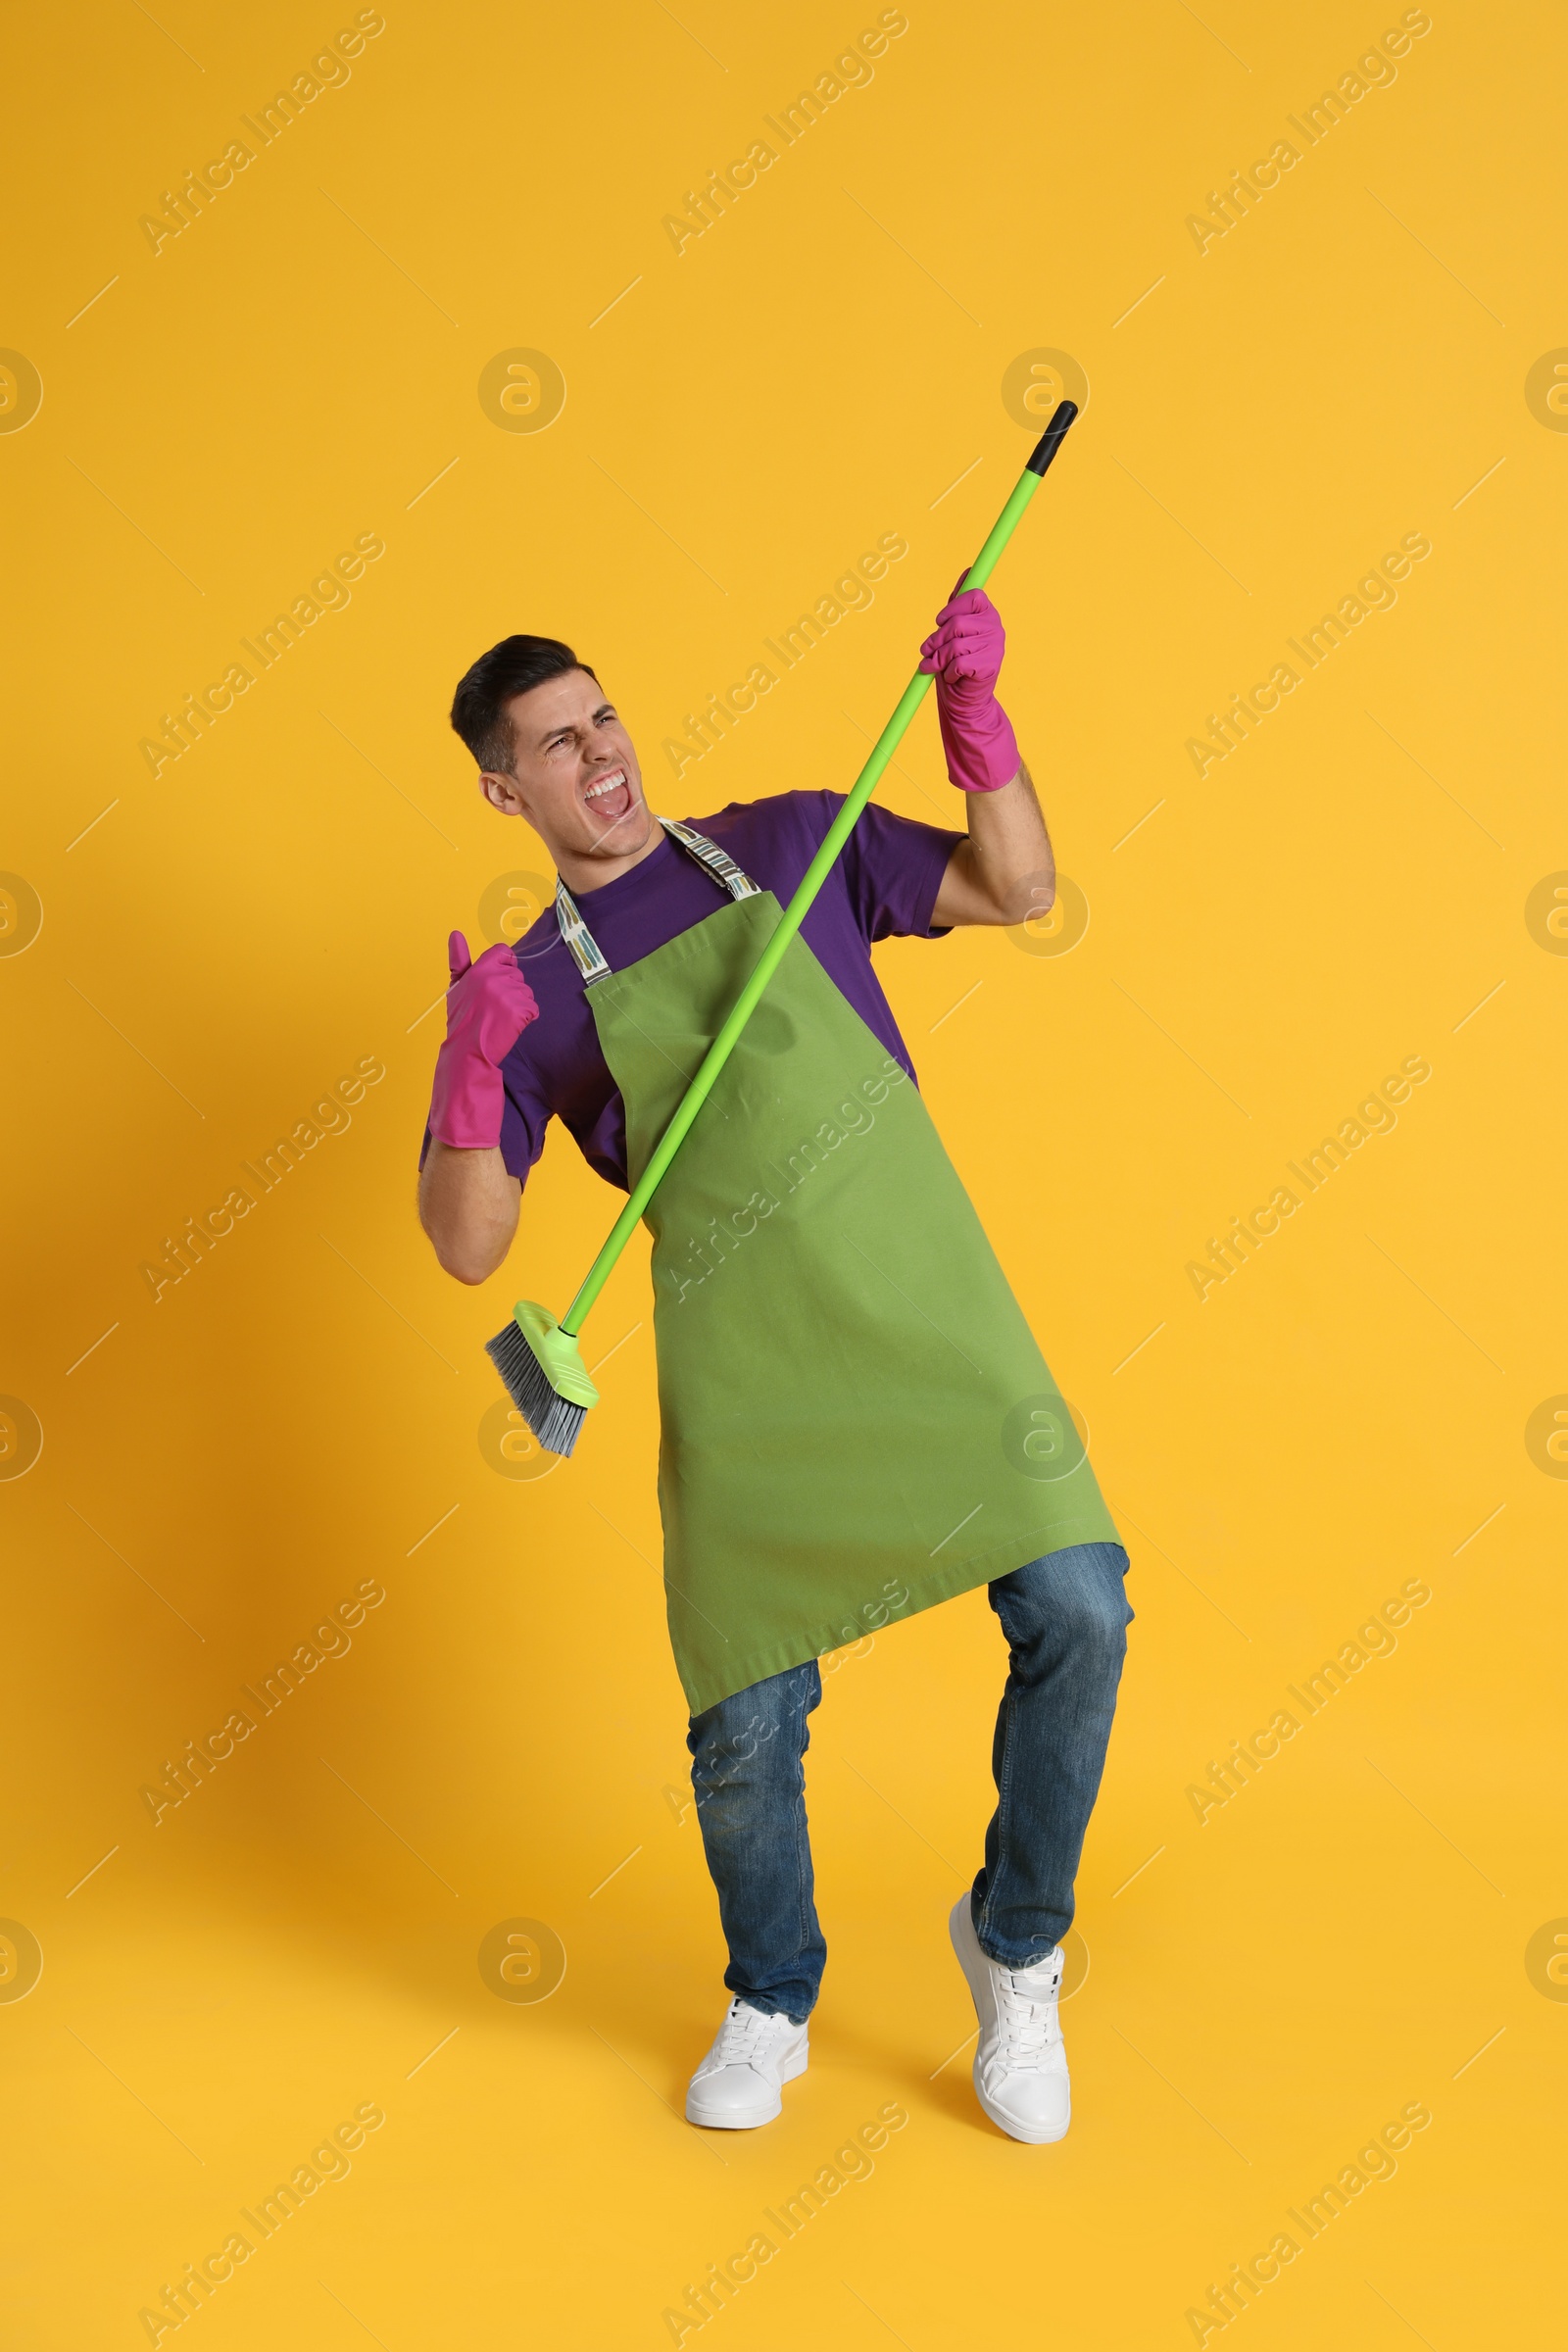 Photo of Man with green broom having fun on orange background